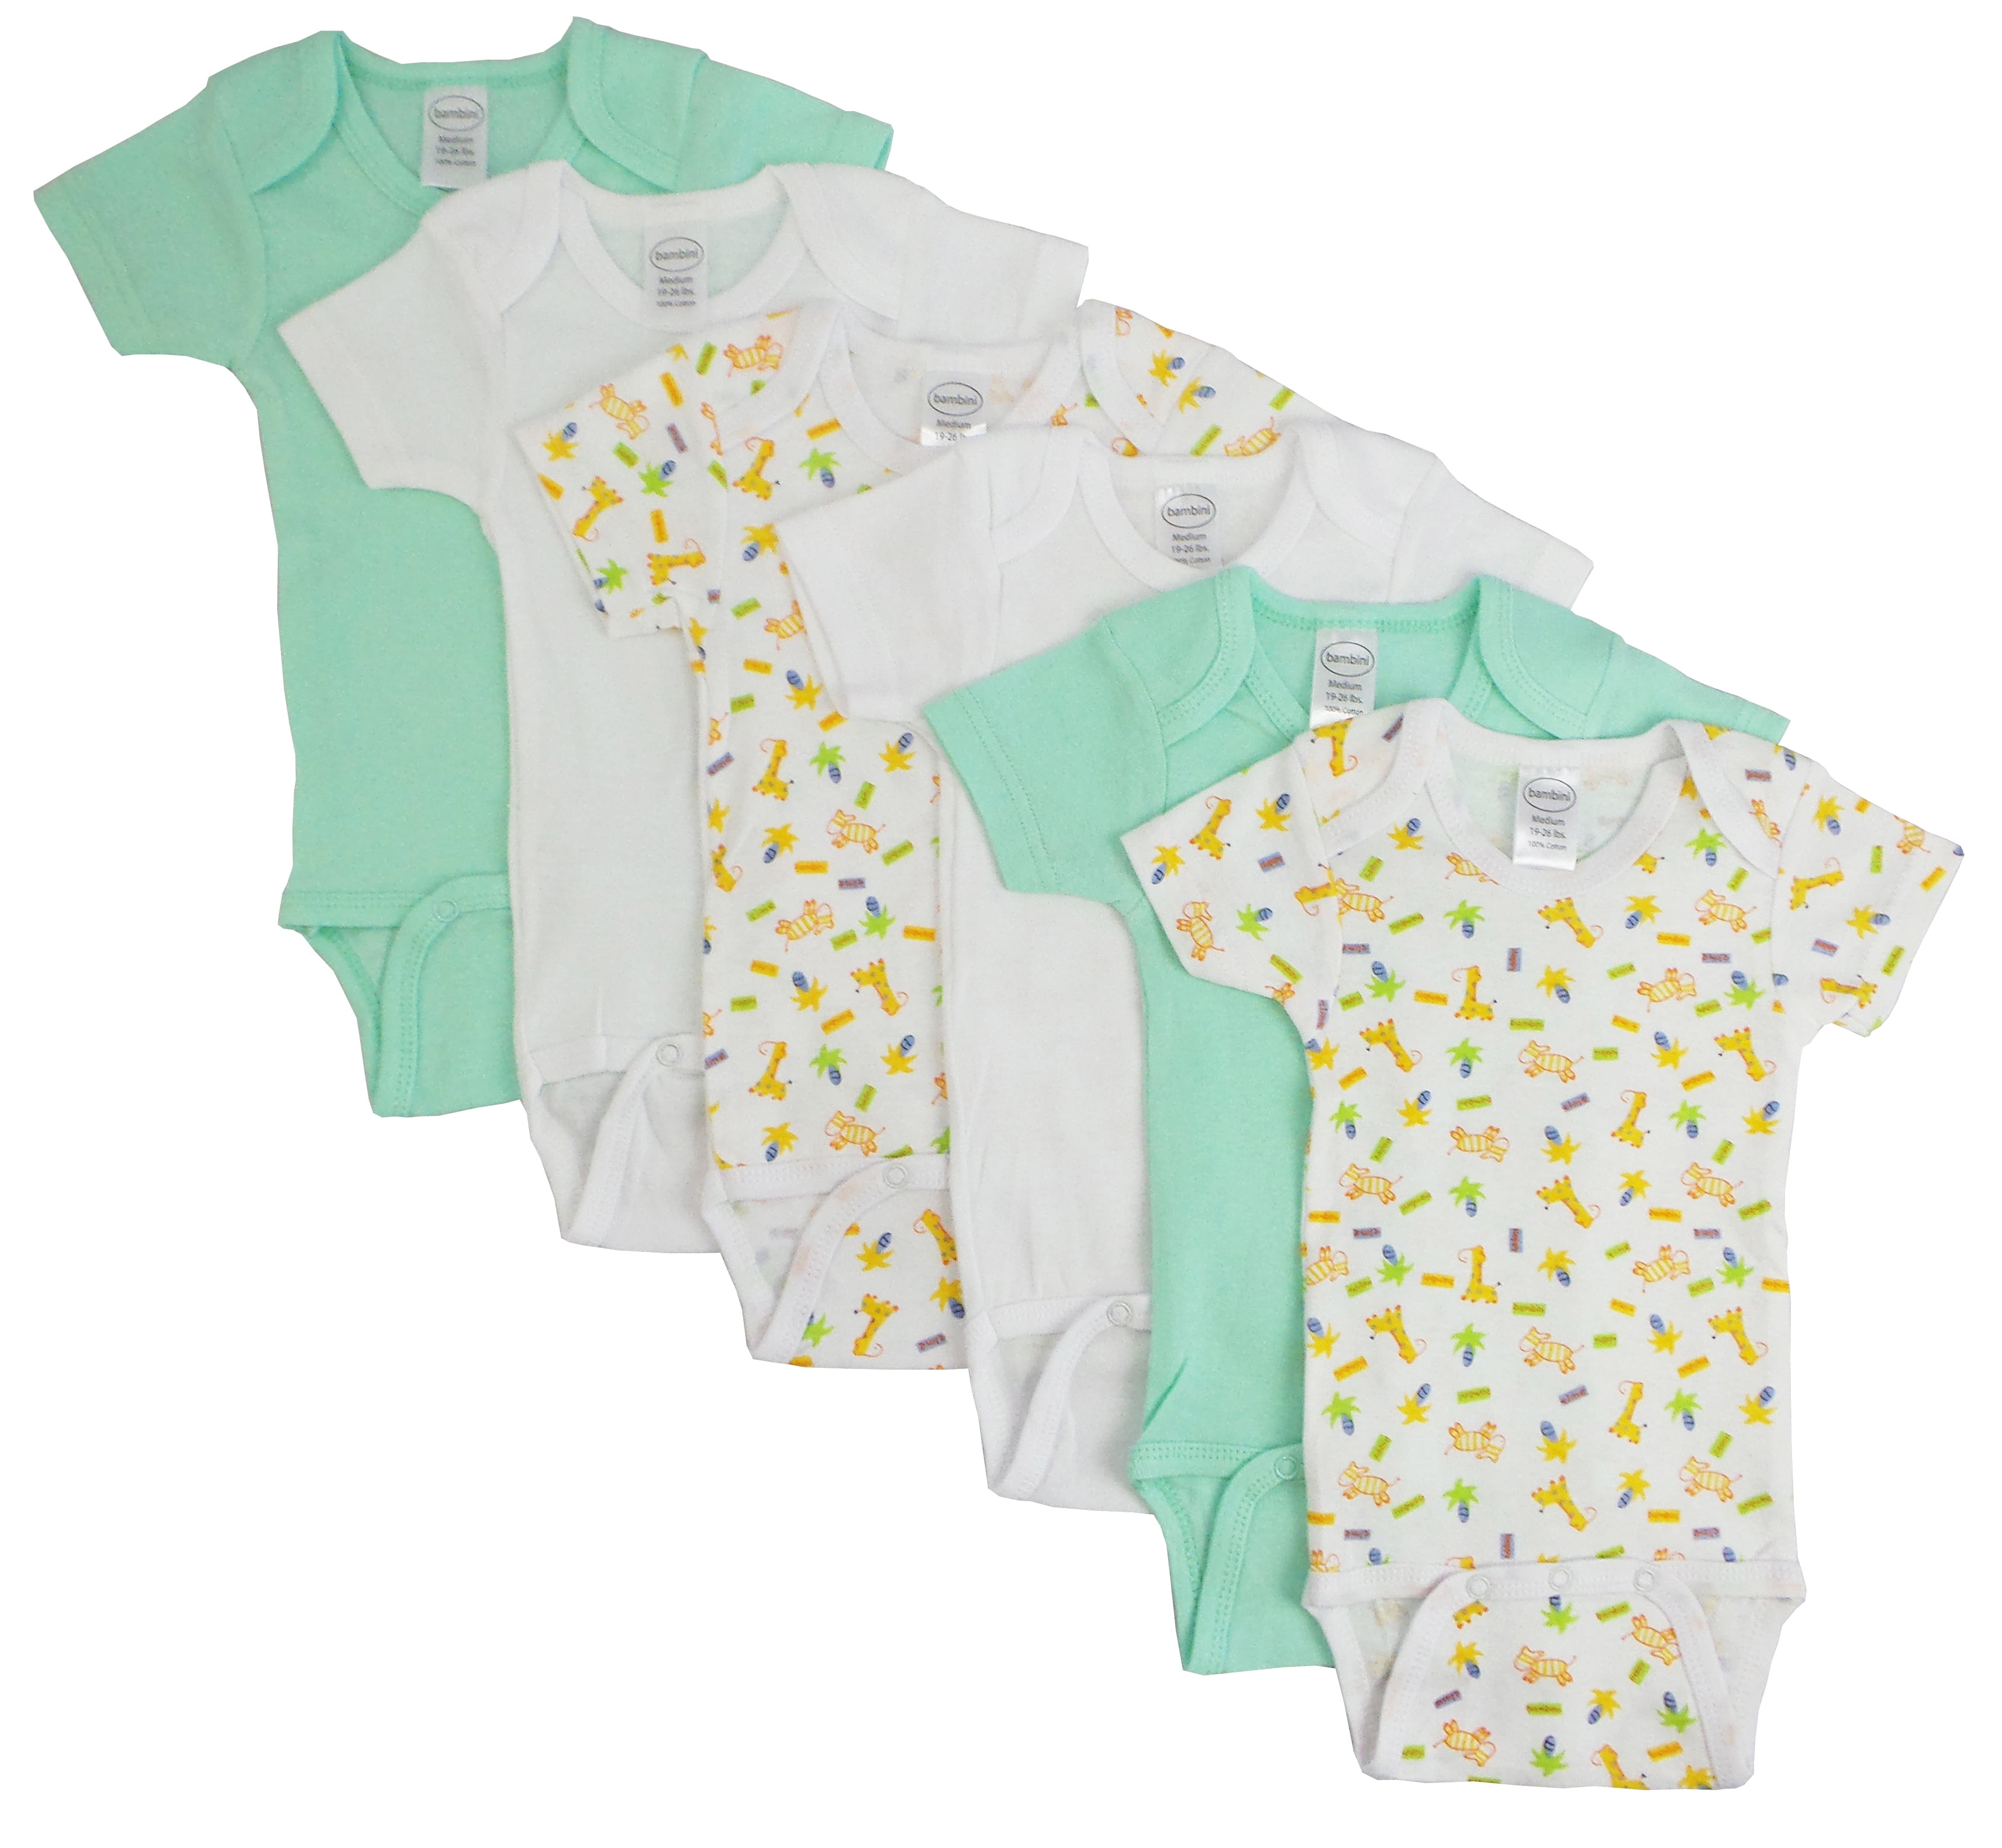 Cs-004p-004p Boys Short Sleeve With Printed, White & Green - Newborn